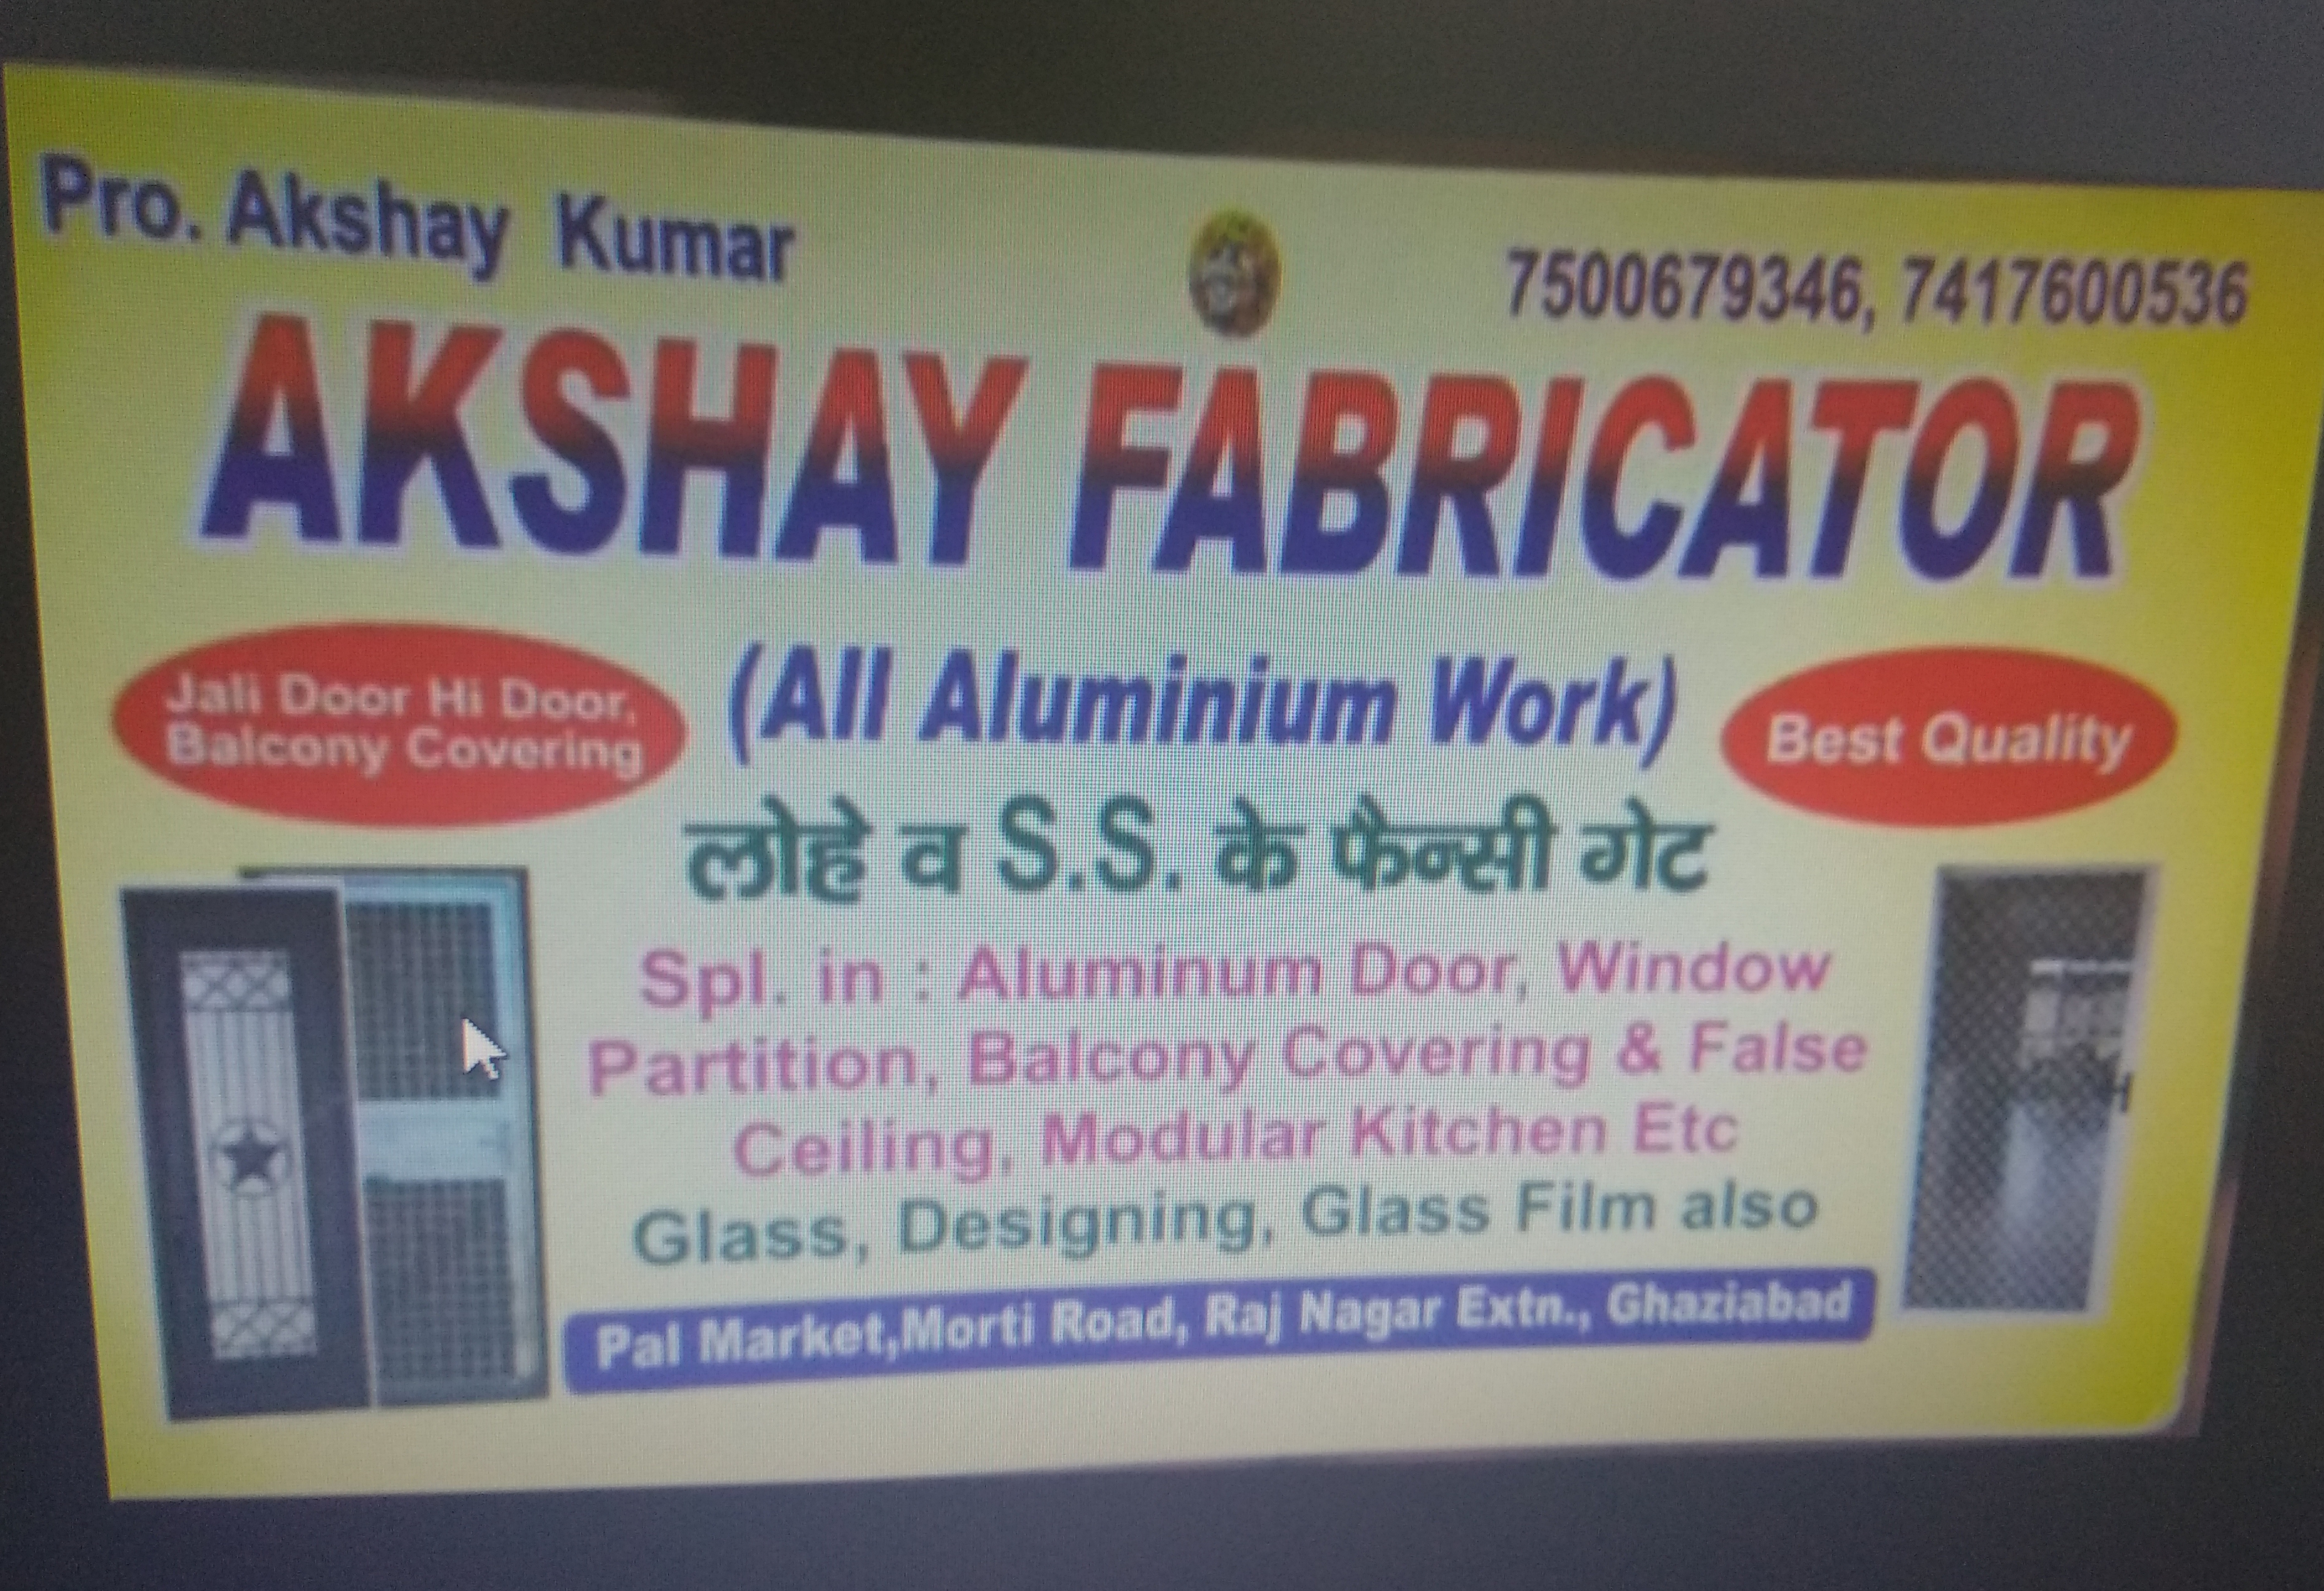 Akshay Fabricator